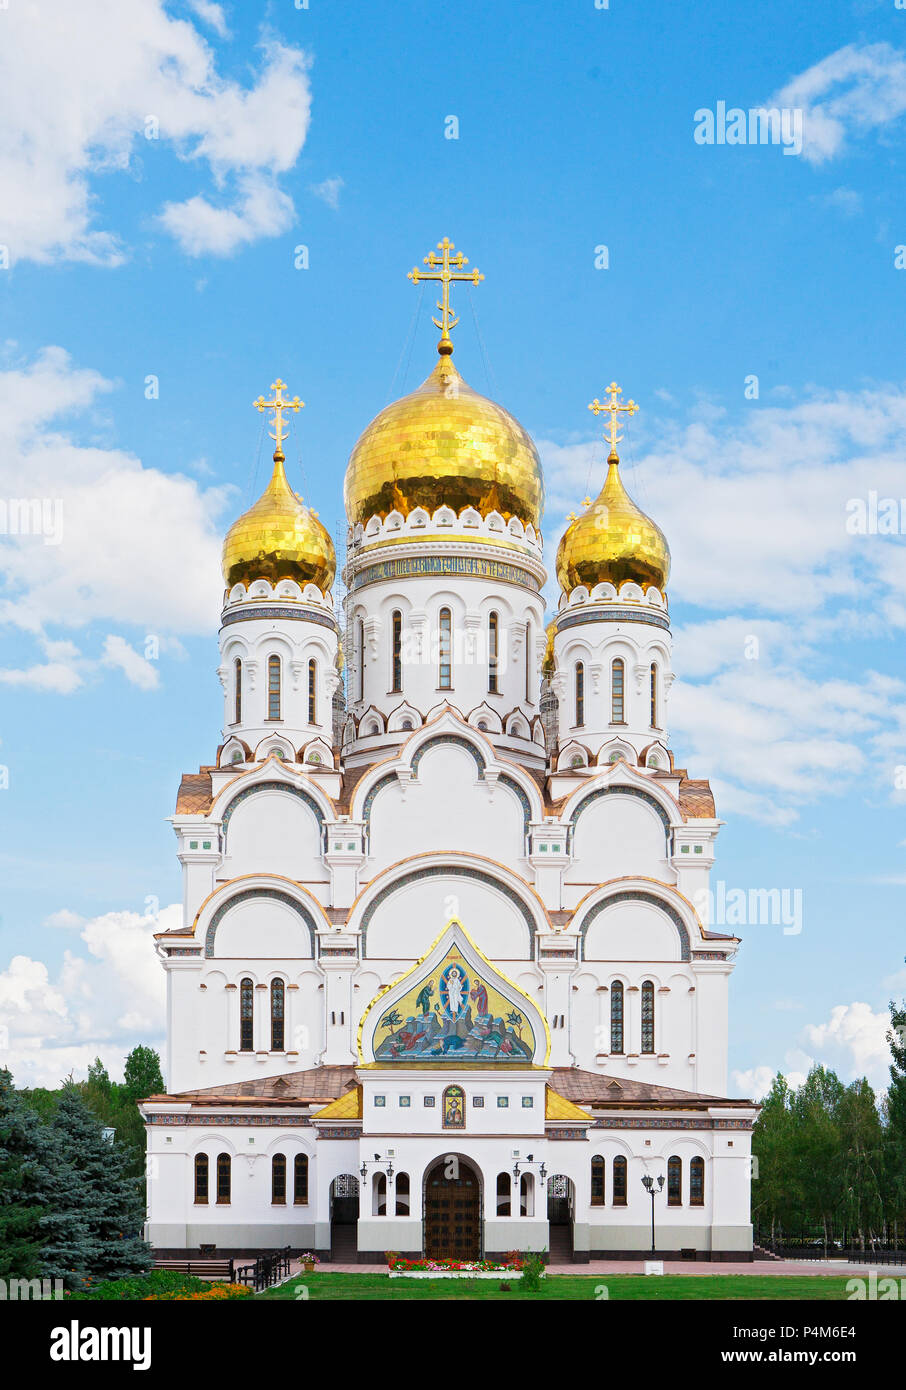 Retter Verklärung Kathedrale in Togliatti, Russland, Wolga. Goldene Kuppel, Tempel. Stockfoto